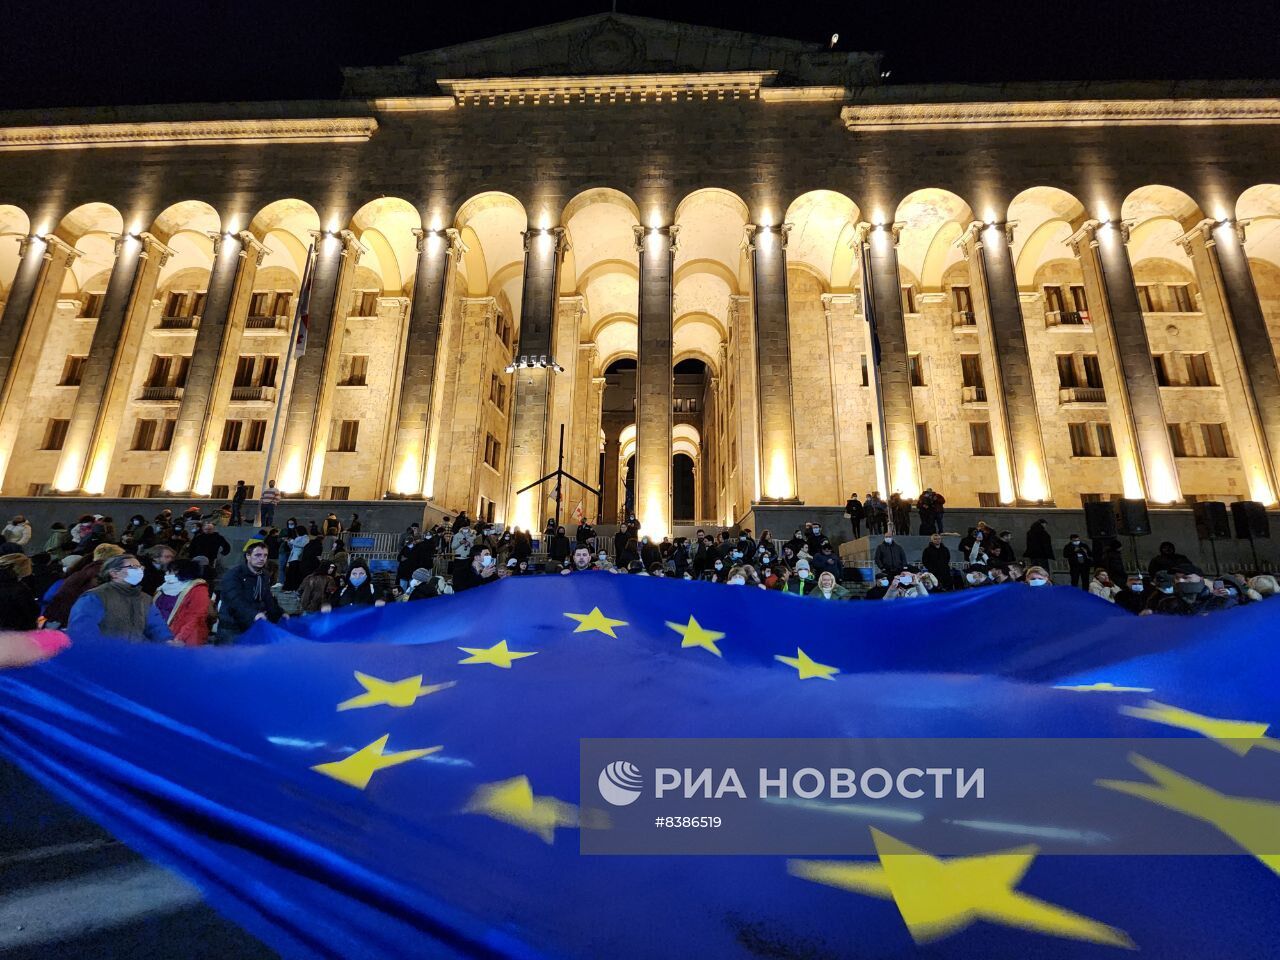 Беспорядки у парламента в Тбилиси